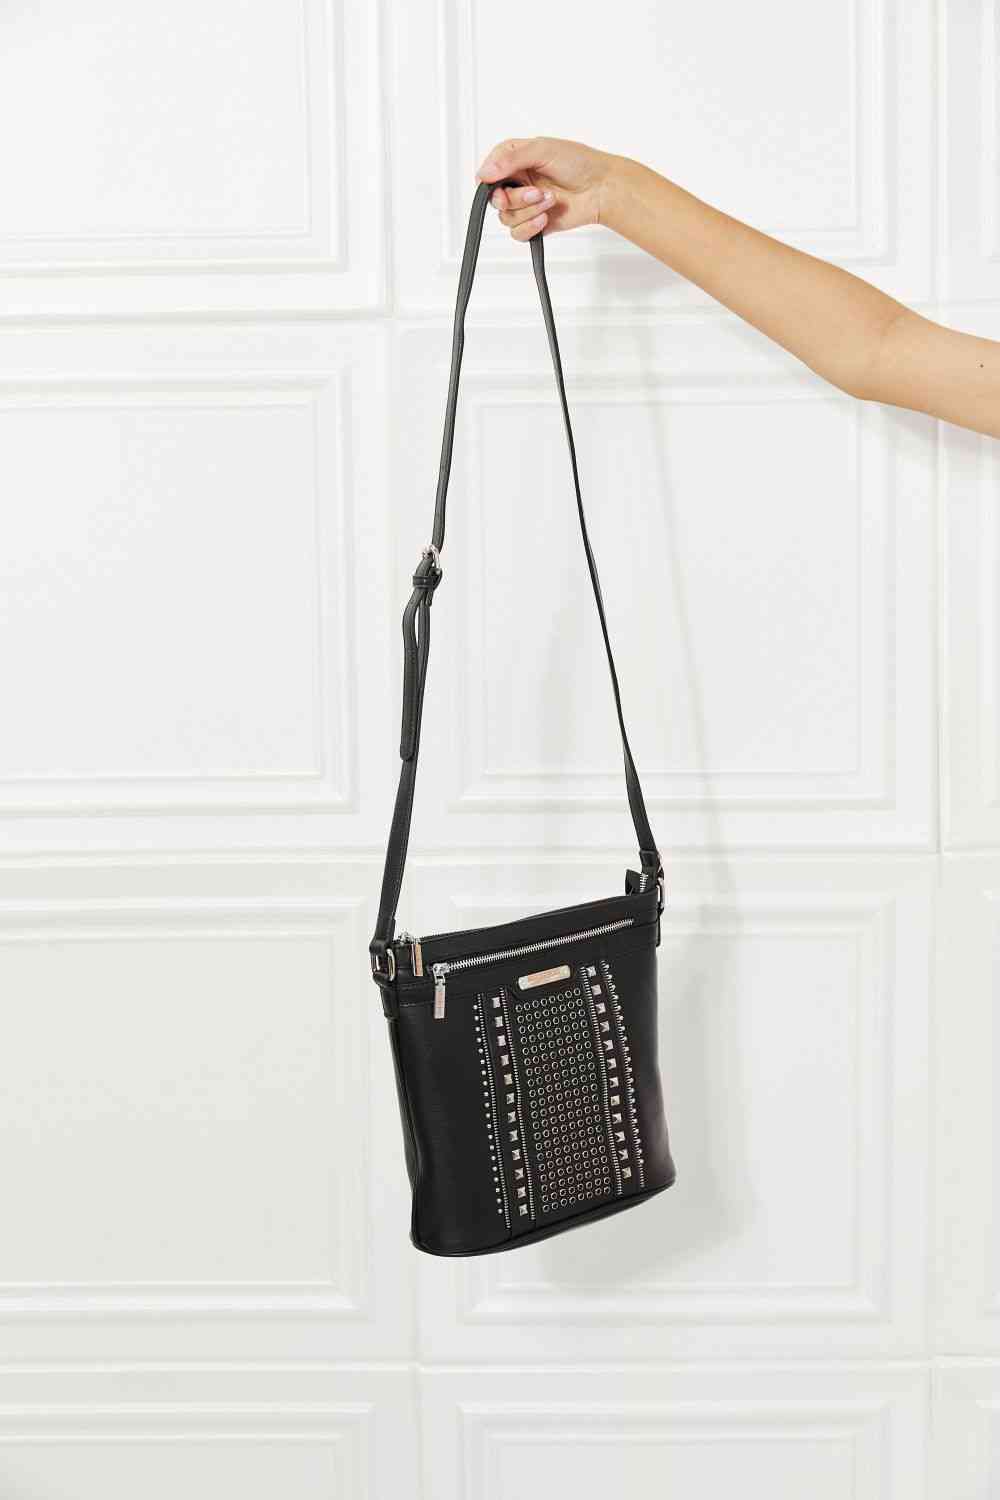 Nicole Lee USA Love Handbag - Premium bag from Concordia Style Boutique - Just $38.26! Shop now at Concordia Style Boutique